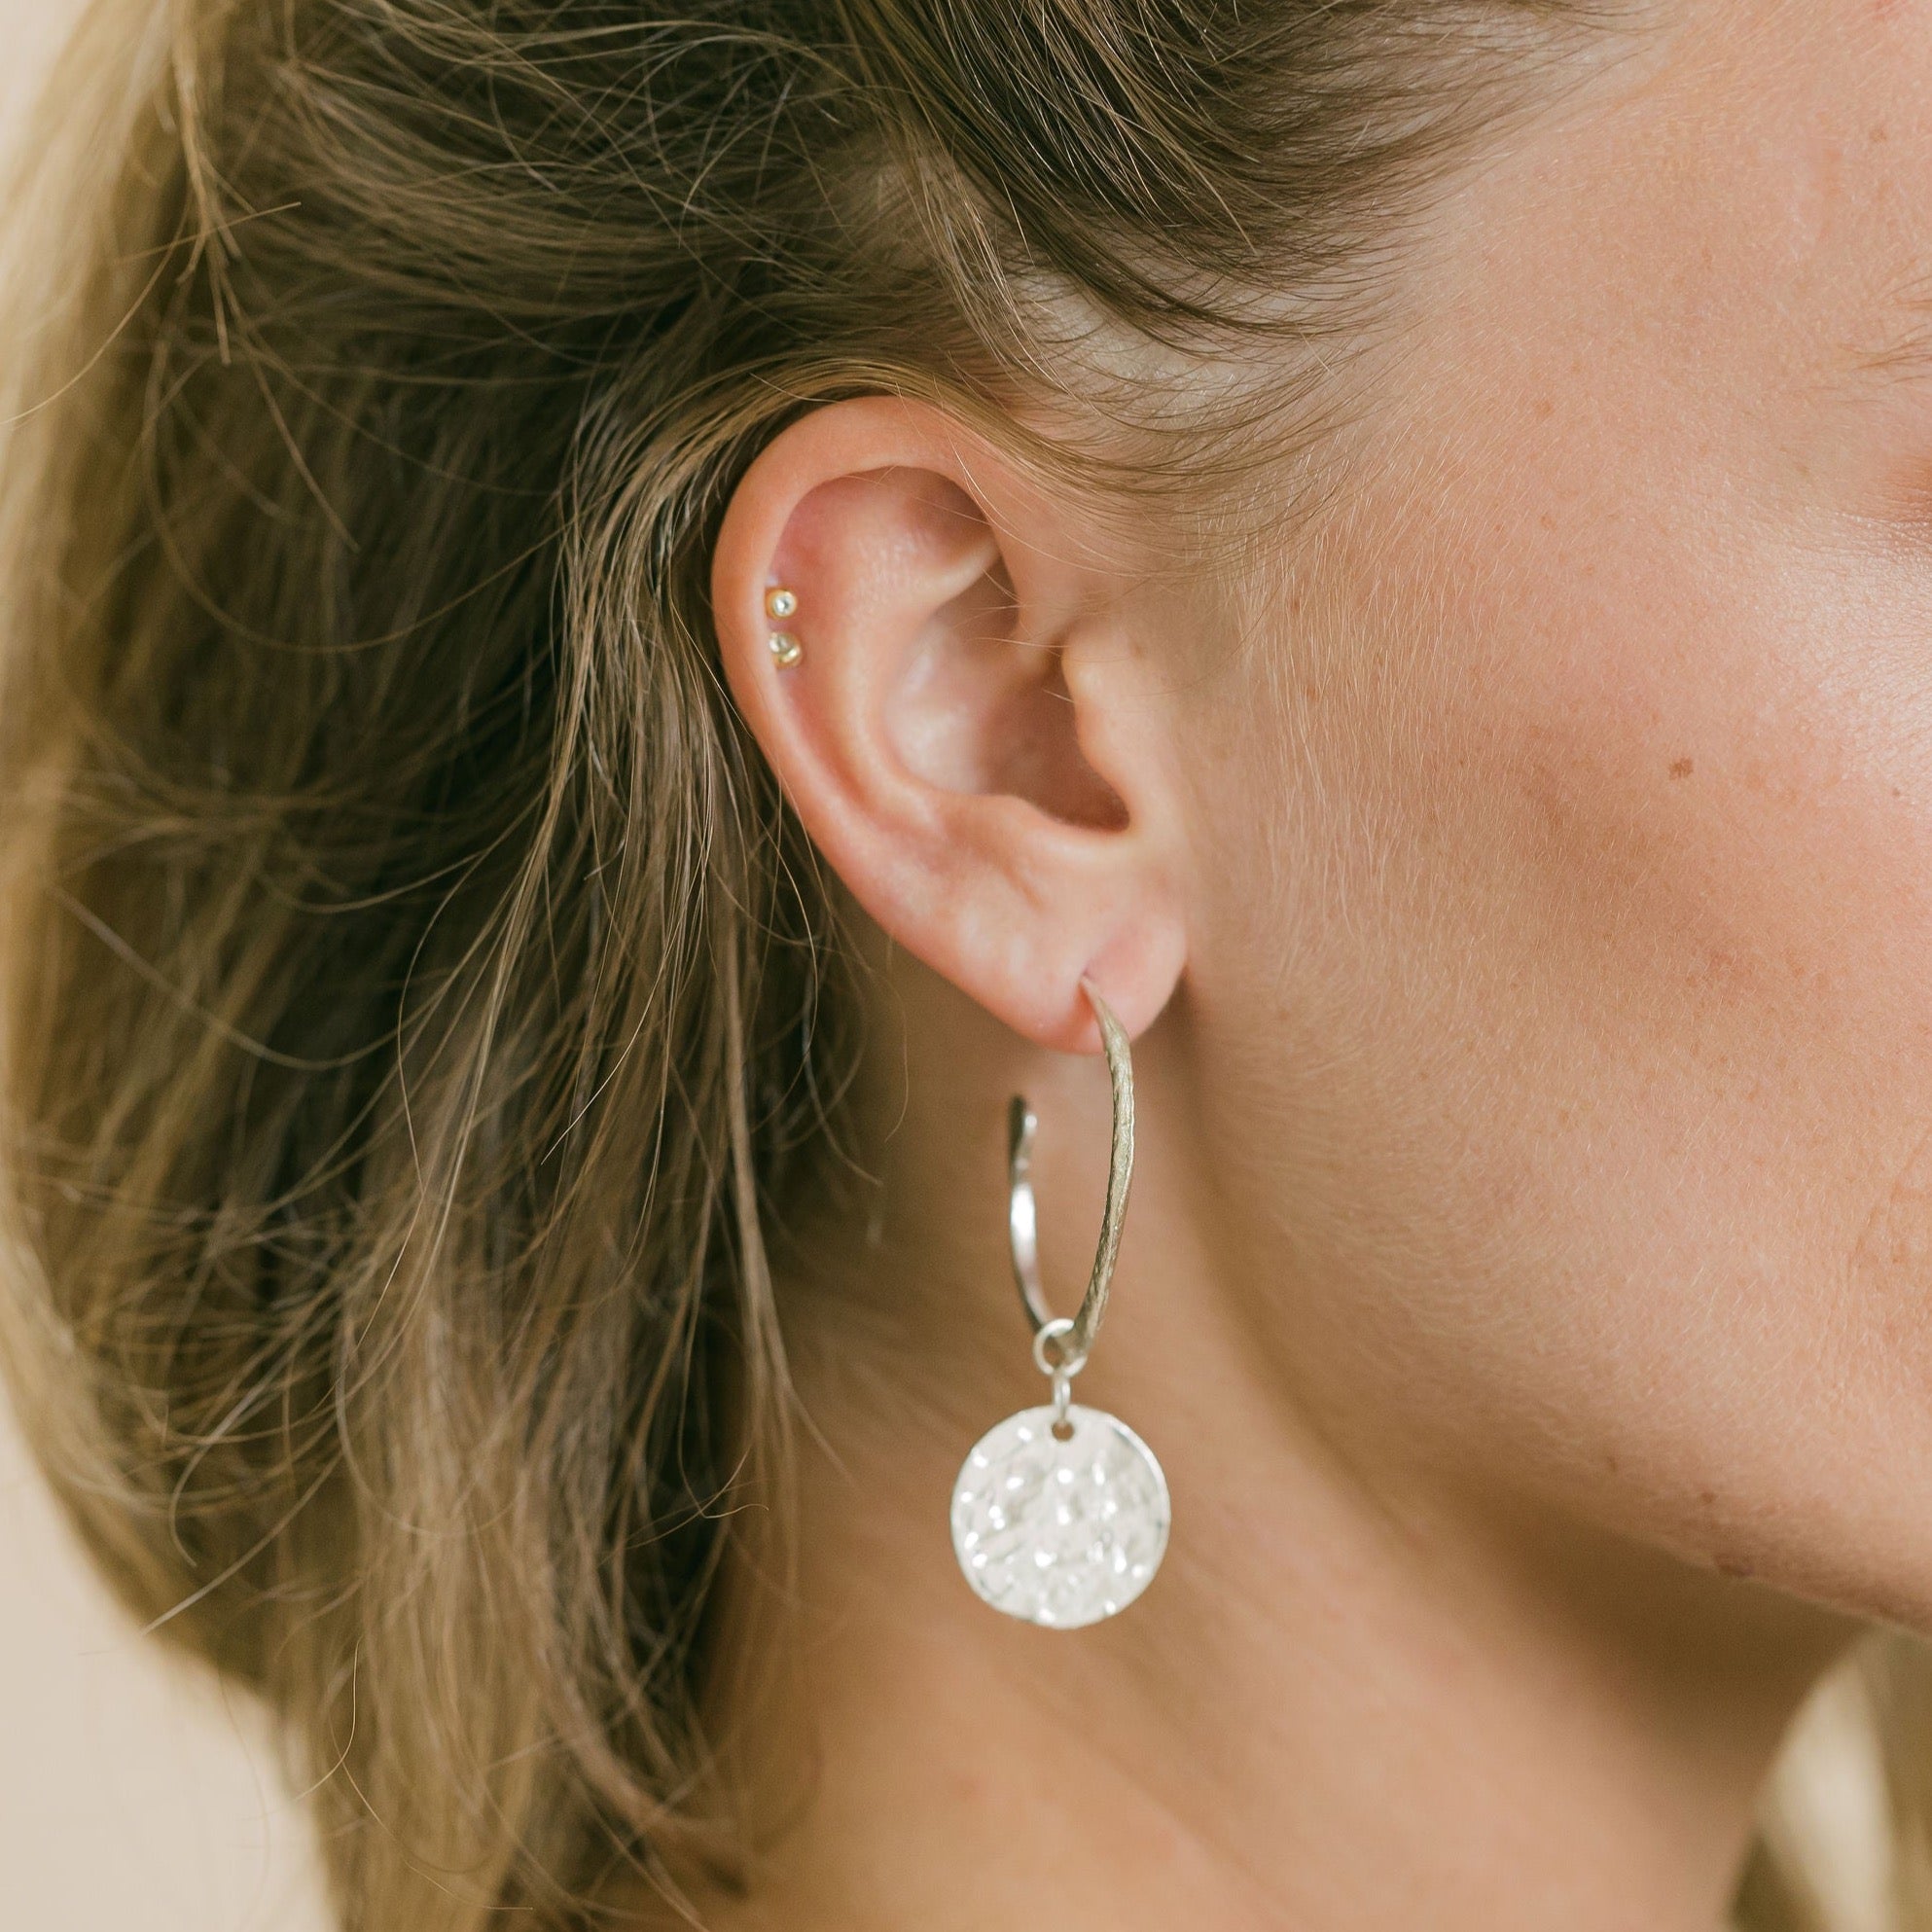 Silver Hoop Earrings with Coin - Harper